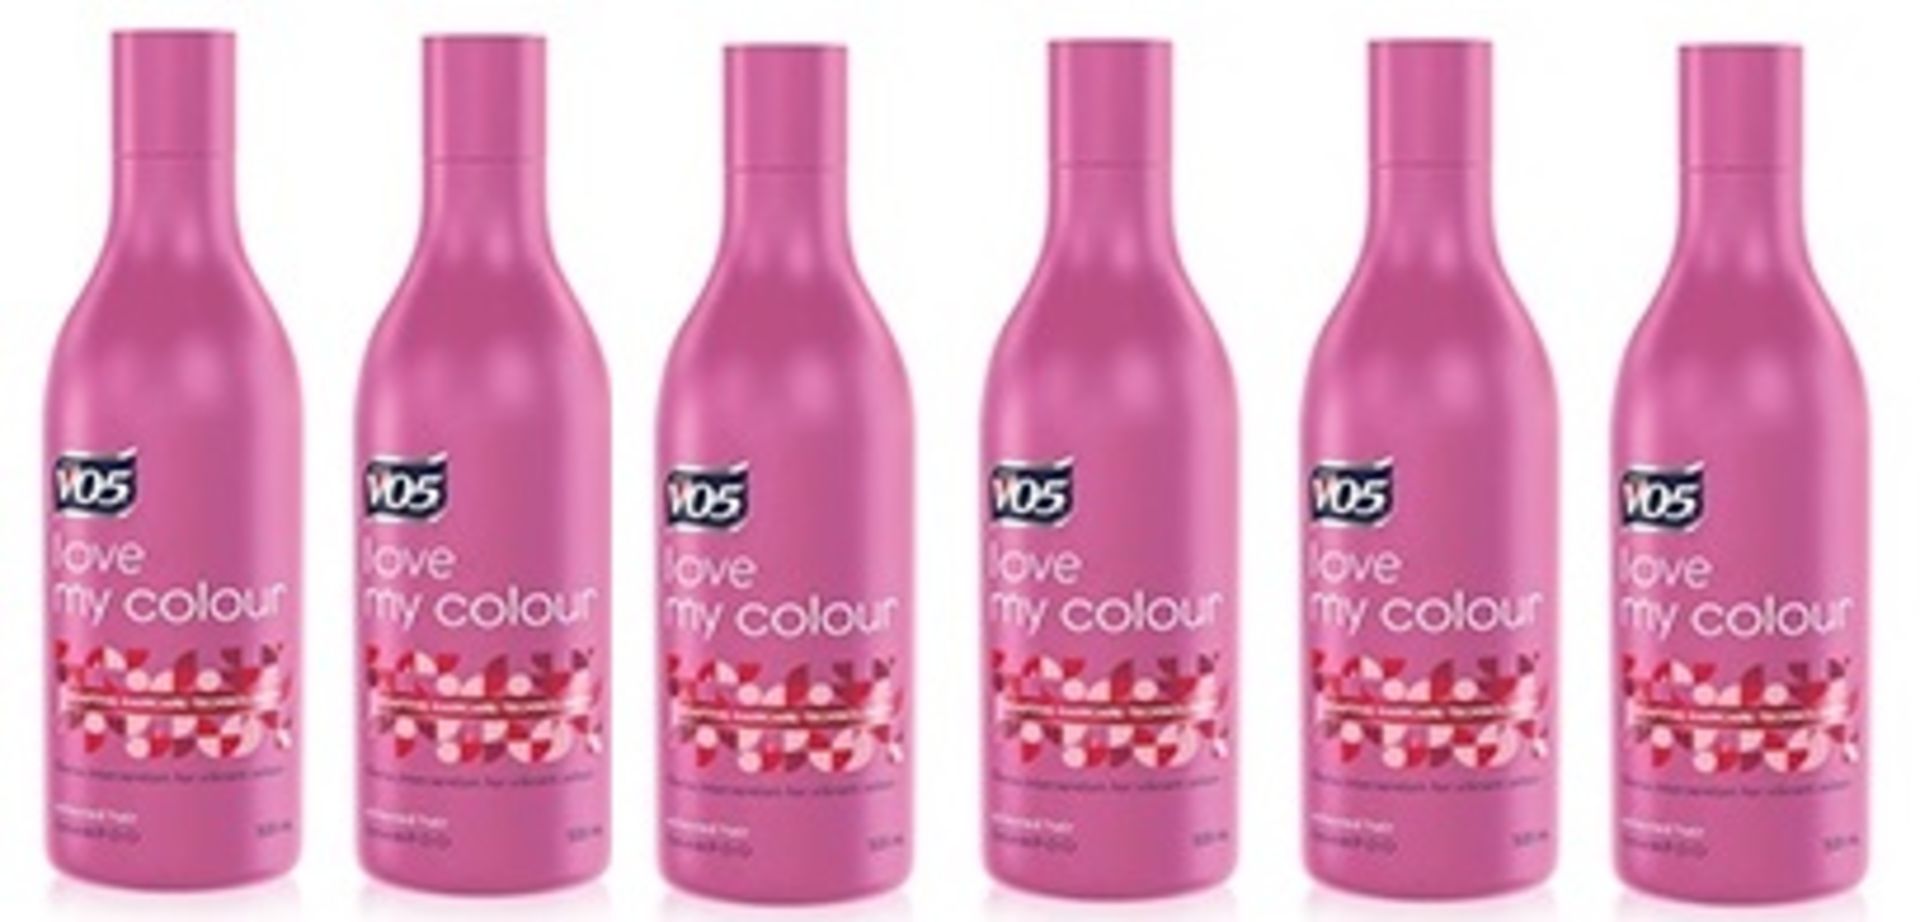 V Brand New A Lot Of Six 500ml Bottles Alberto VO5 Love My Colour Coloured Hair Shampoo £11.39